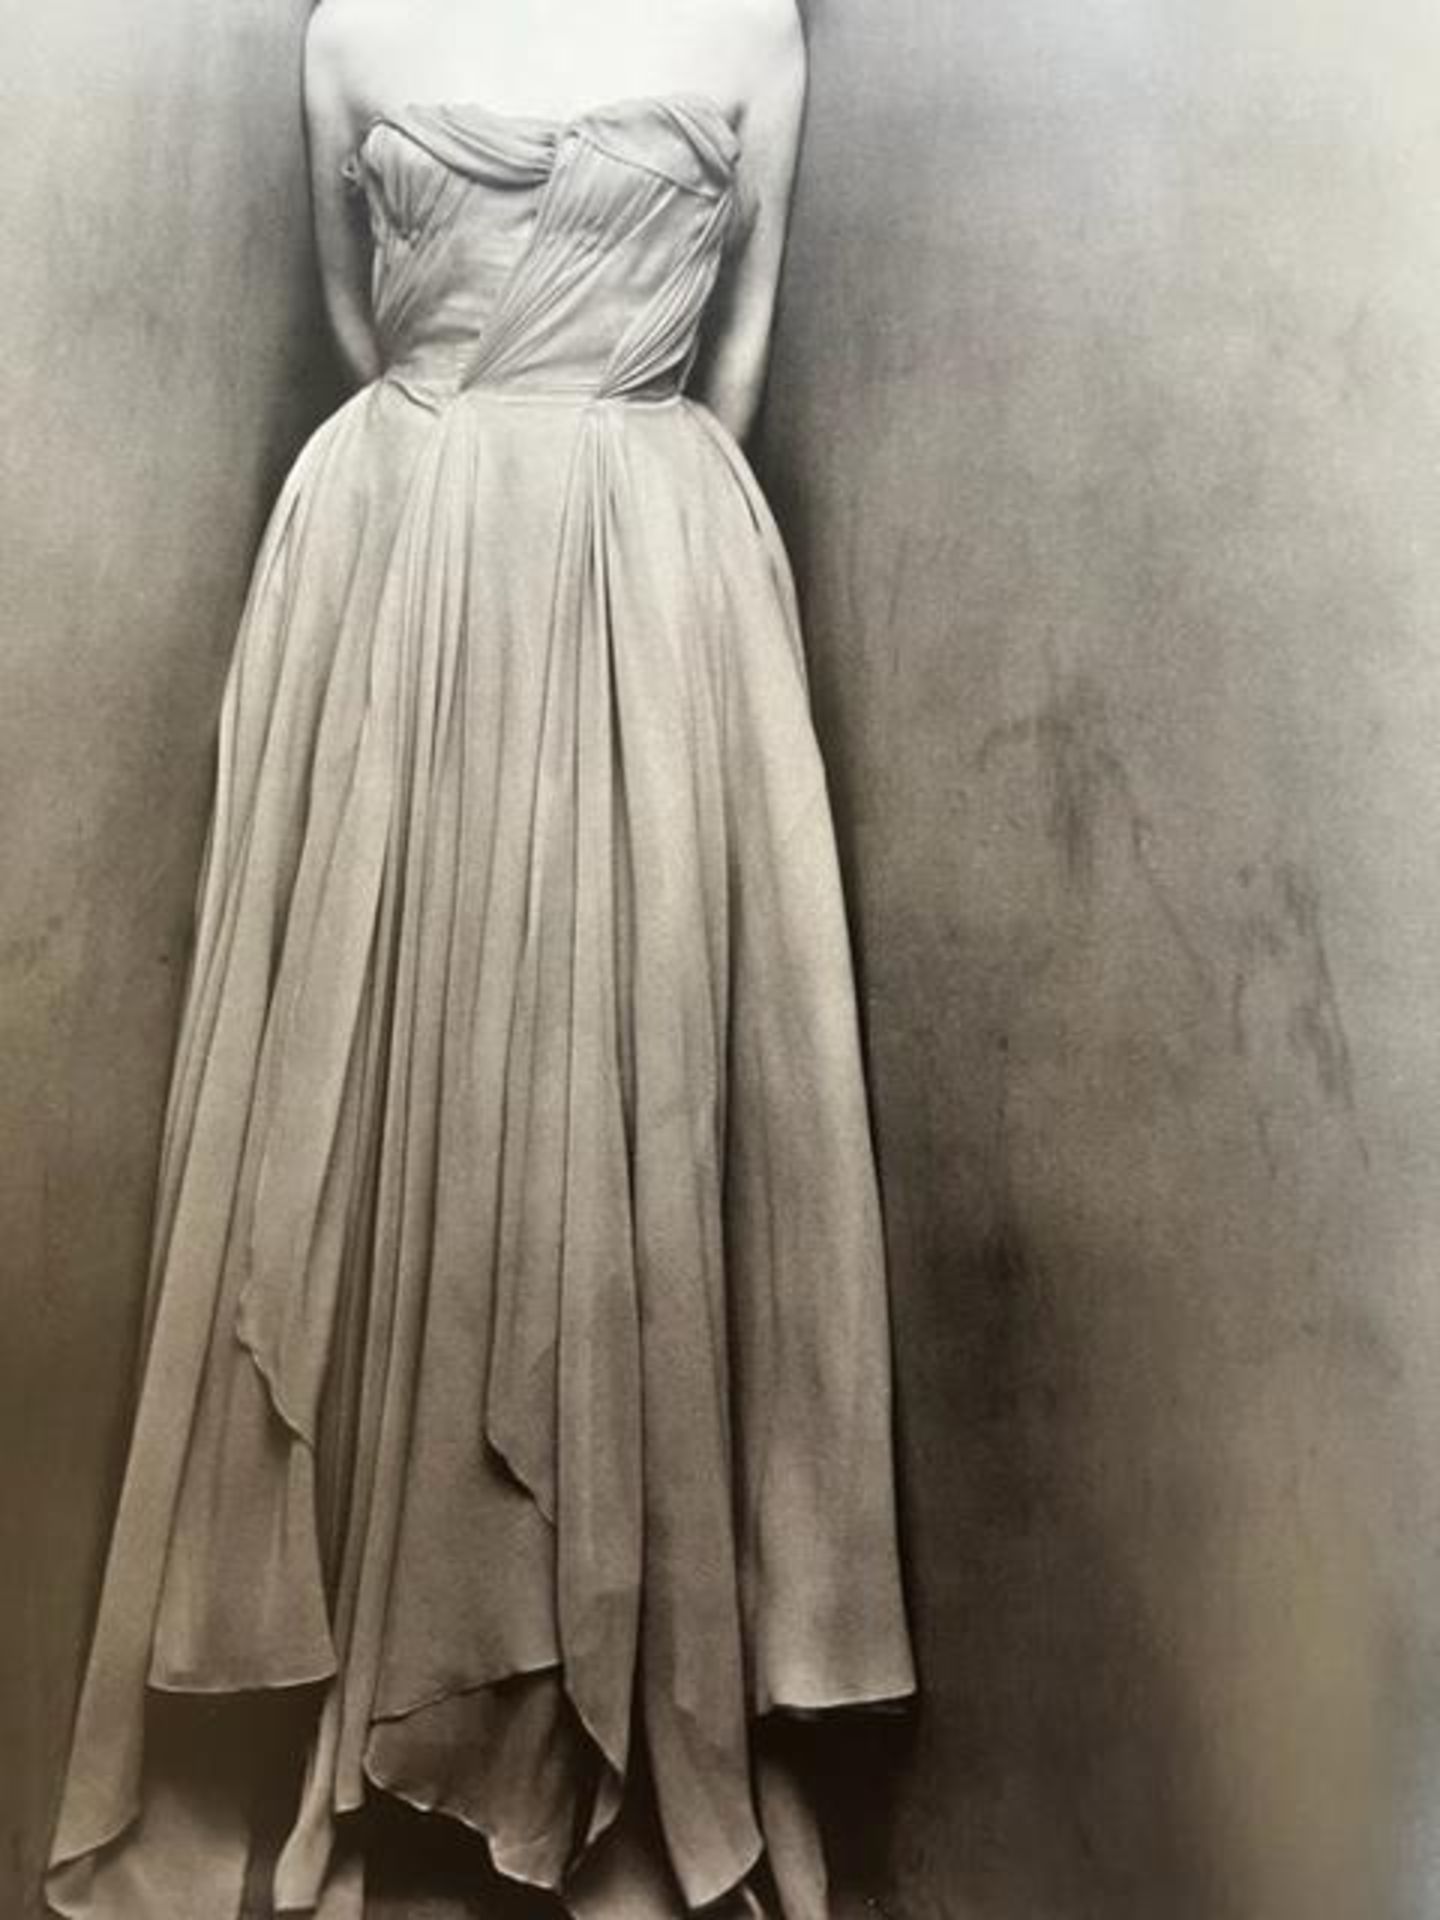 Irving Penn "Mrs. Rhinelander Stewart" Print. - Image 9 of 12